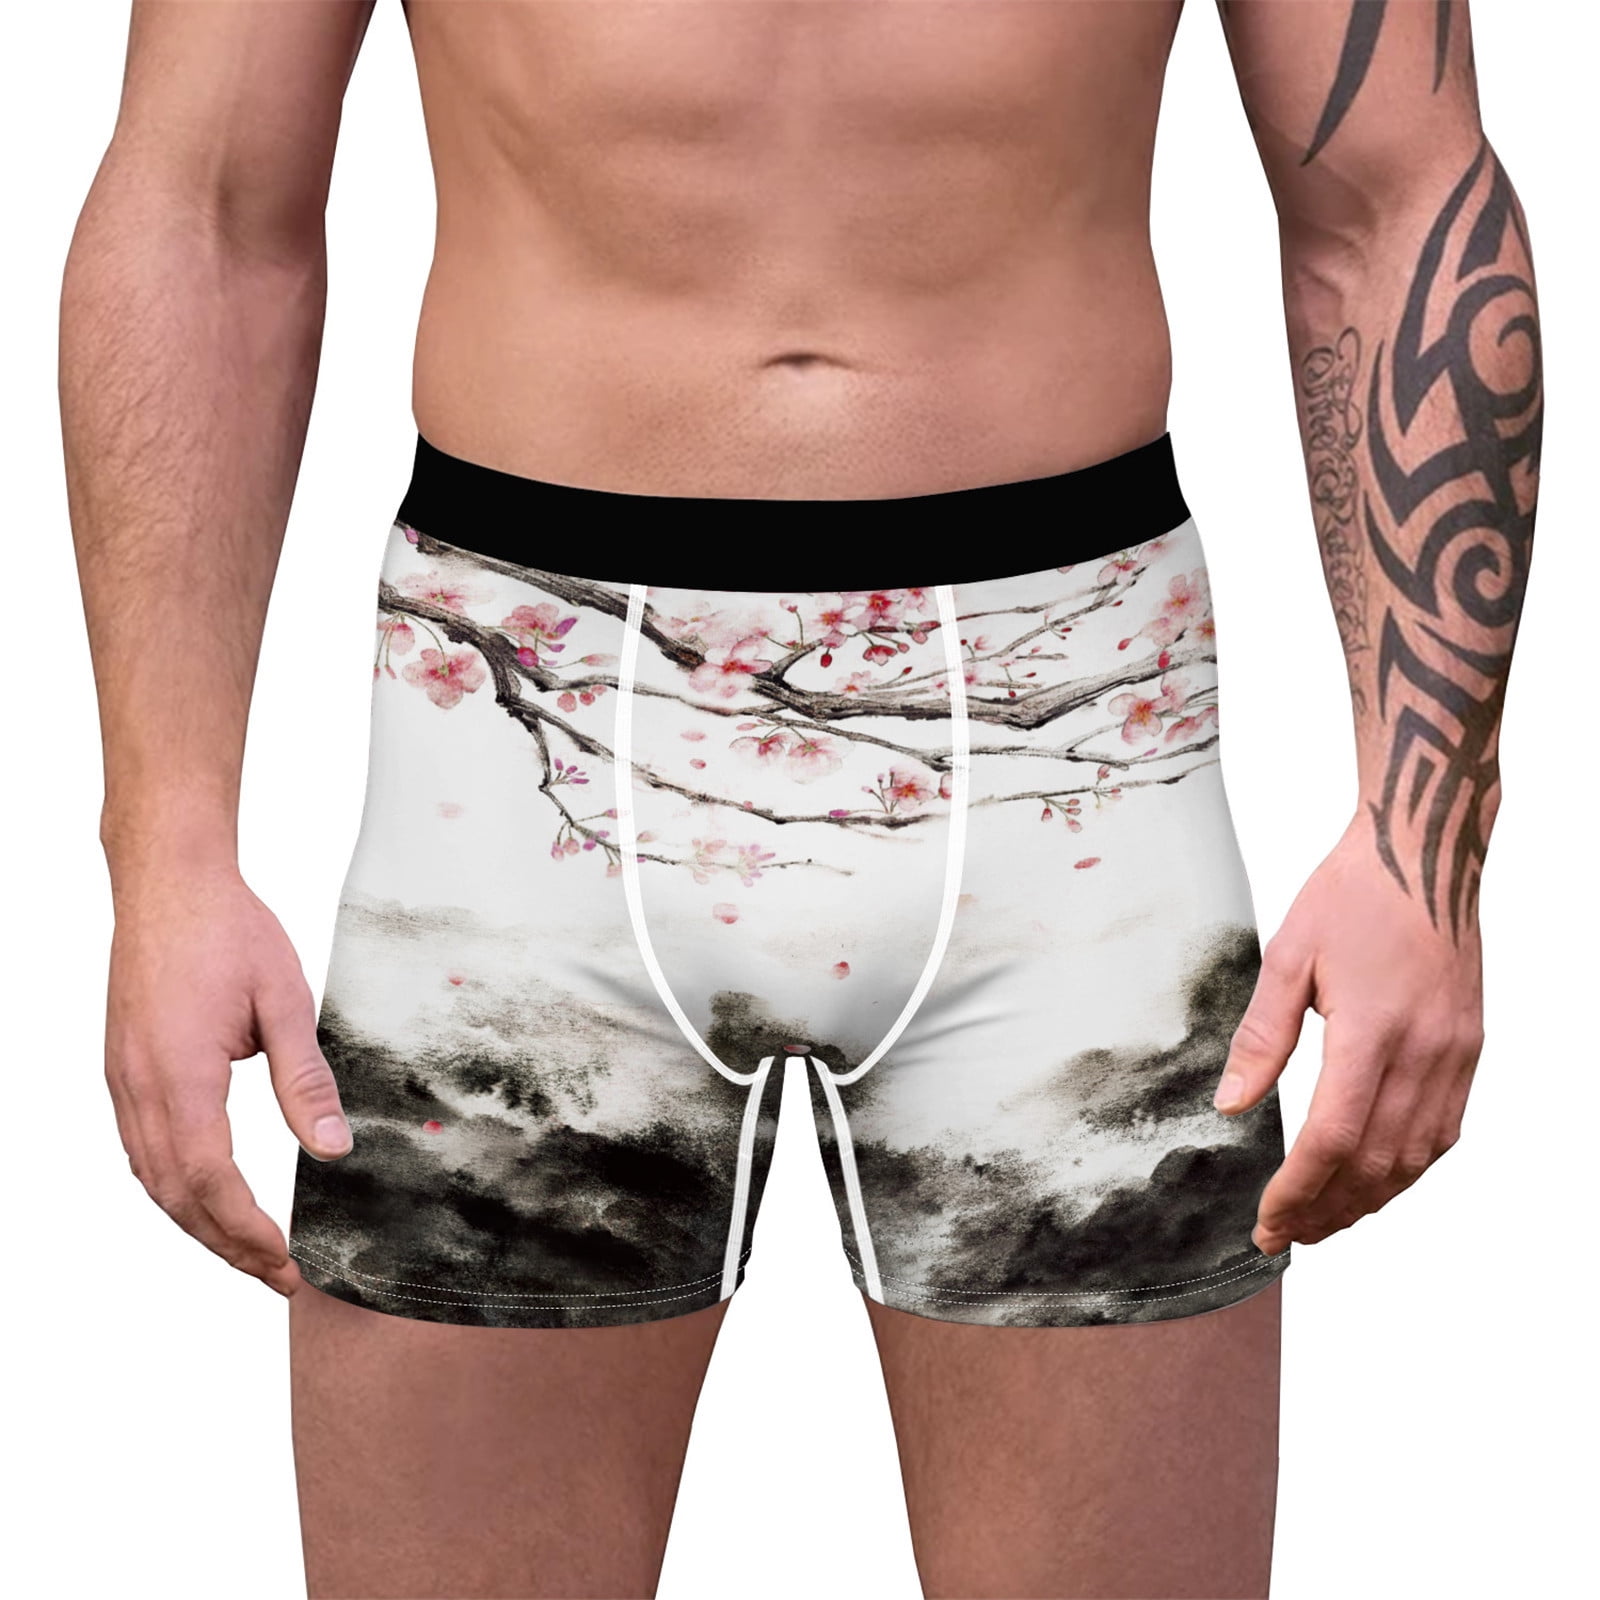 Aayomet Boxer Brief For Men Men's Underwear – Cool Cotton Trunk with  Contour Pouch and Shorter 4 Inseam – Comfortable Underwear,White XXL 